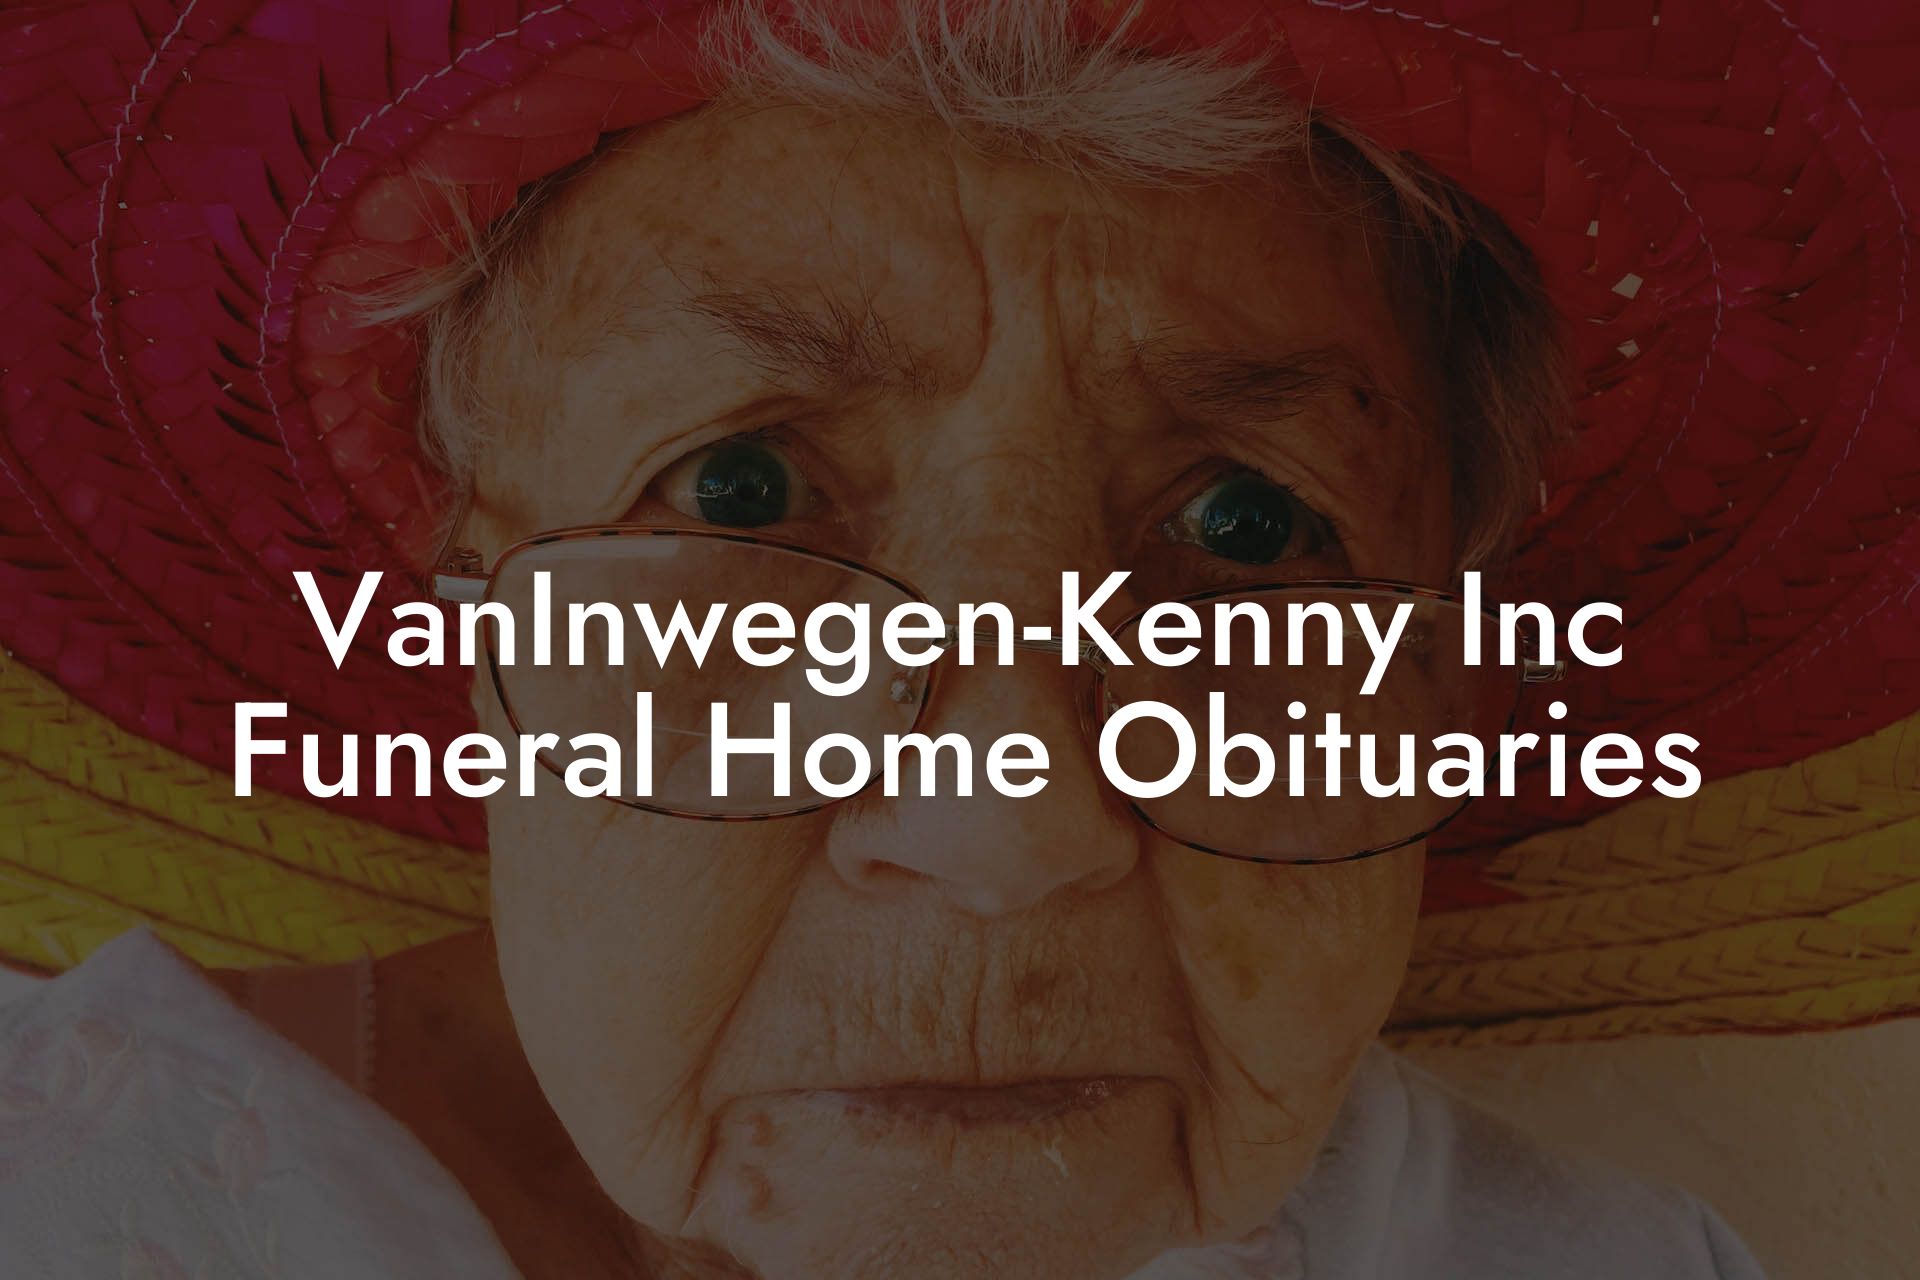 VanInwegen-Kenny Inc Funeral Home Obituaries